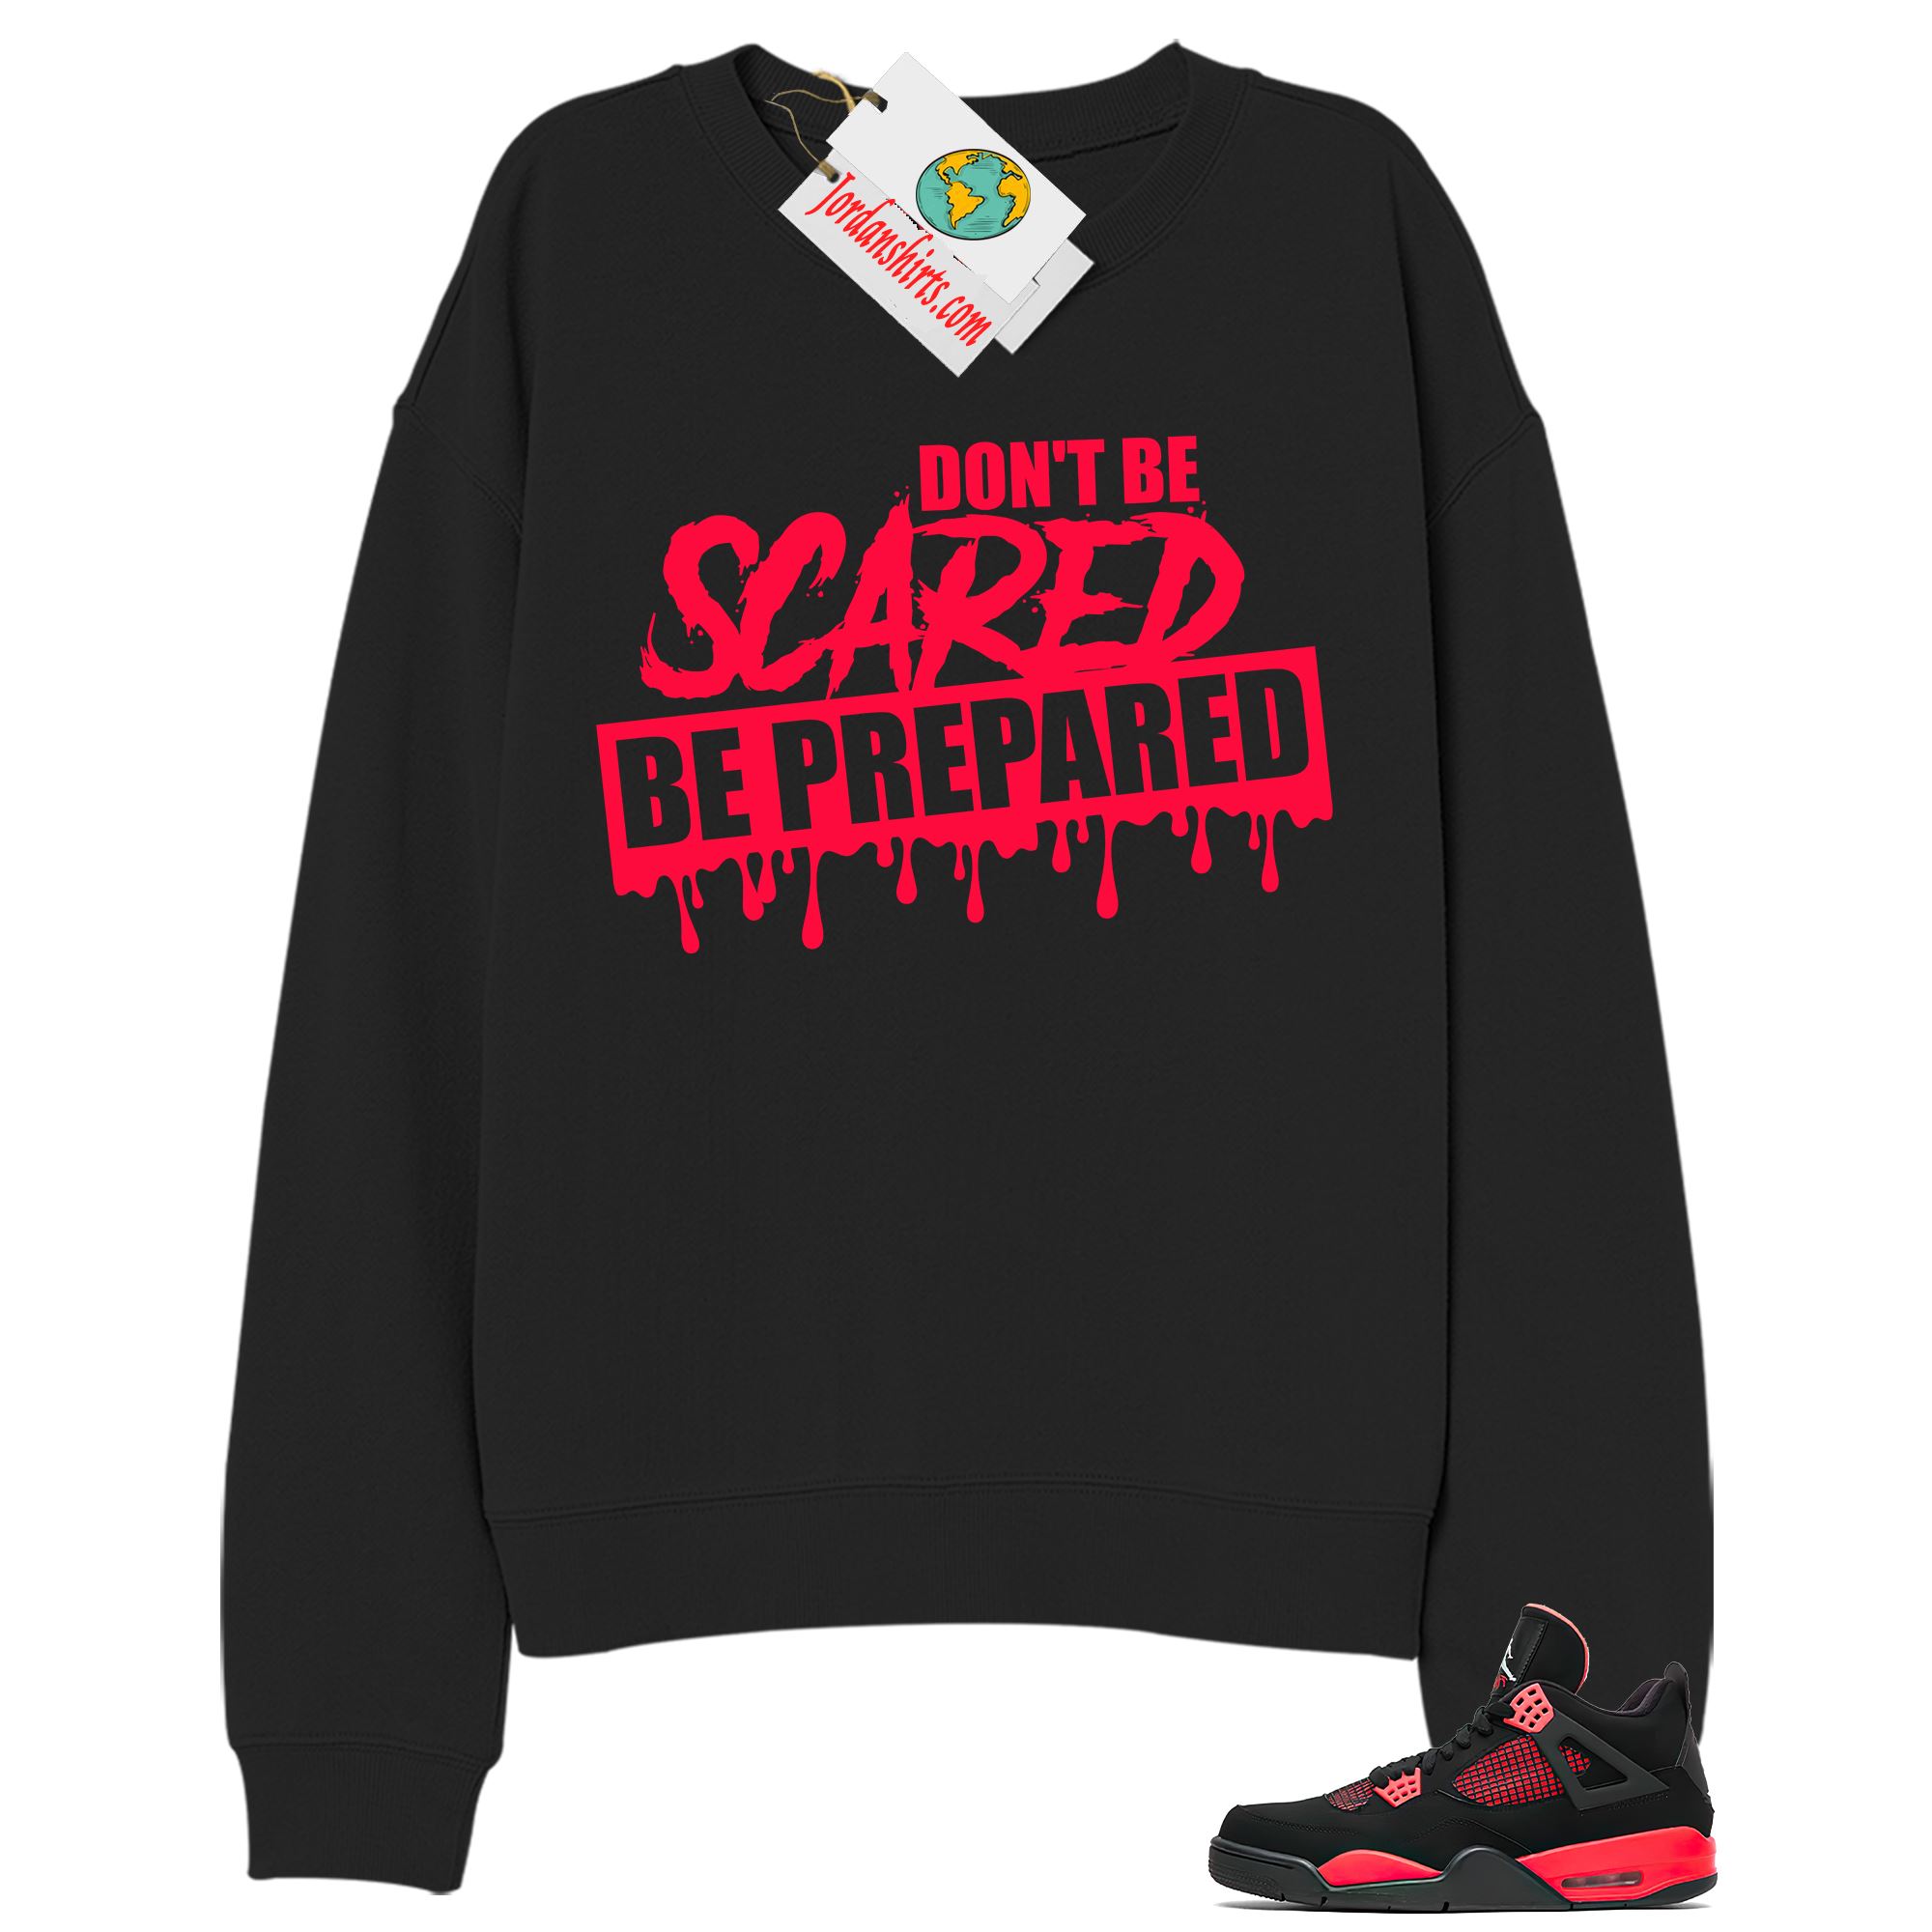 Jordan 4 Sweatshirt, Dont Be Scared Be Prepared Black Sweatshirt Air Jordan 4 Red Thunder 4s Size Up To 5xl